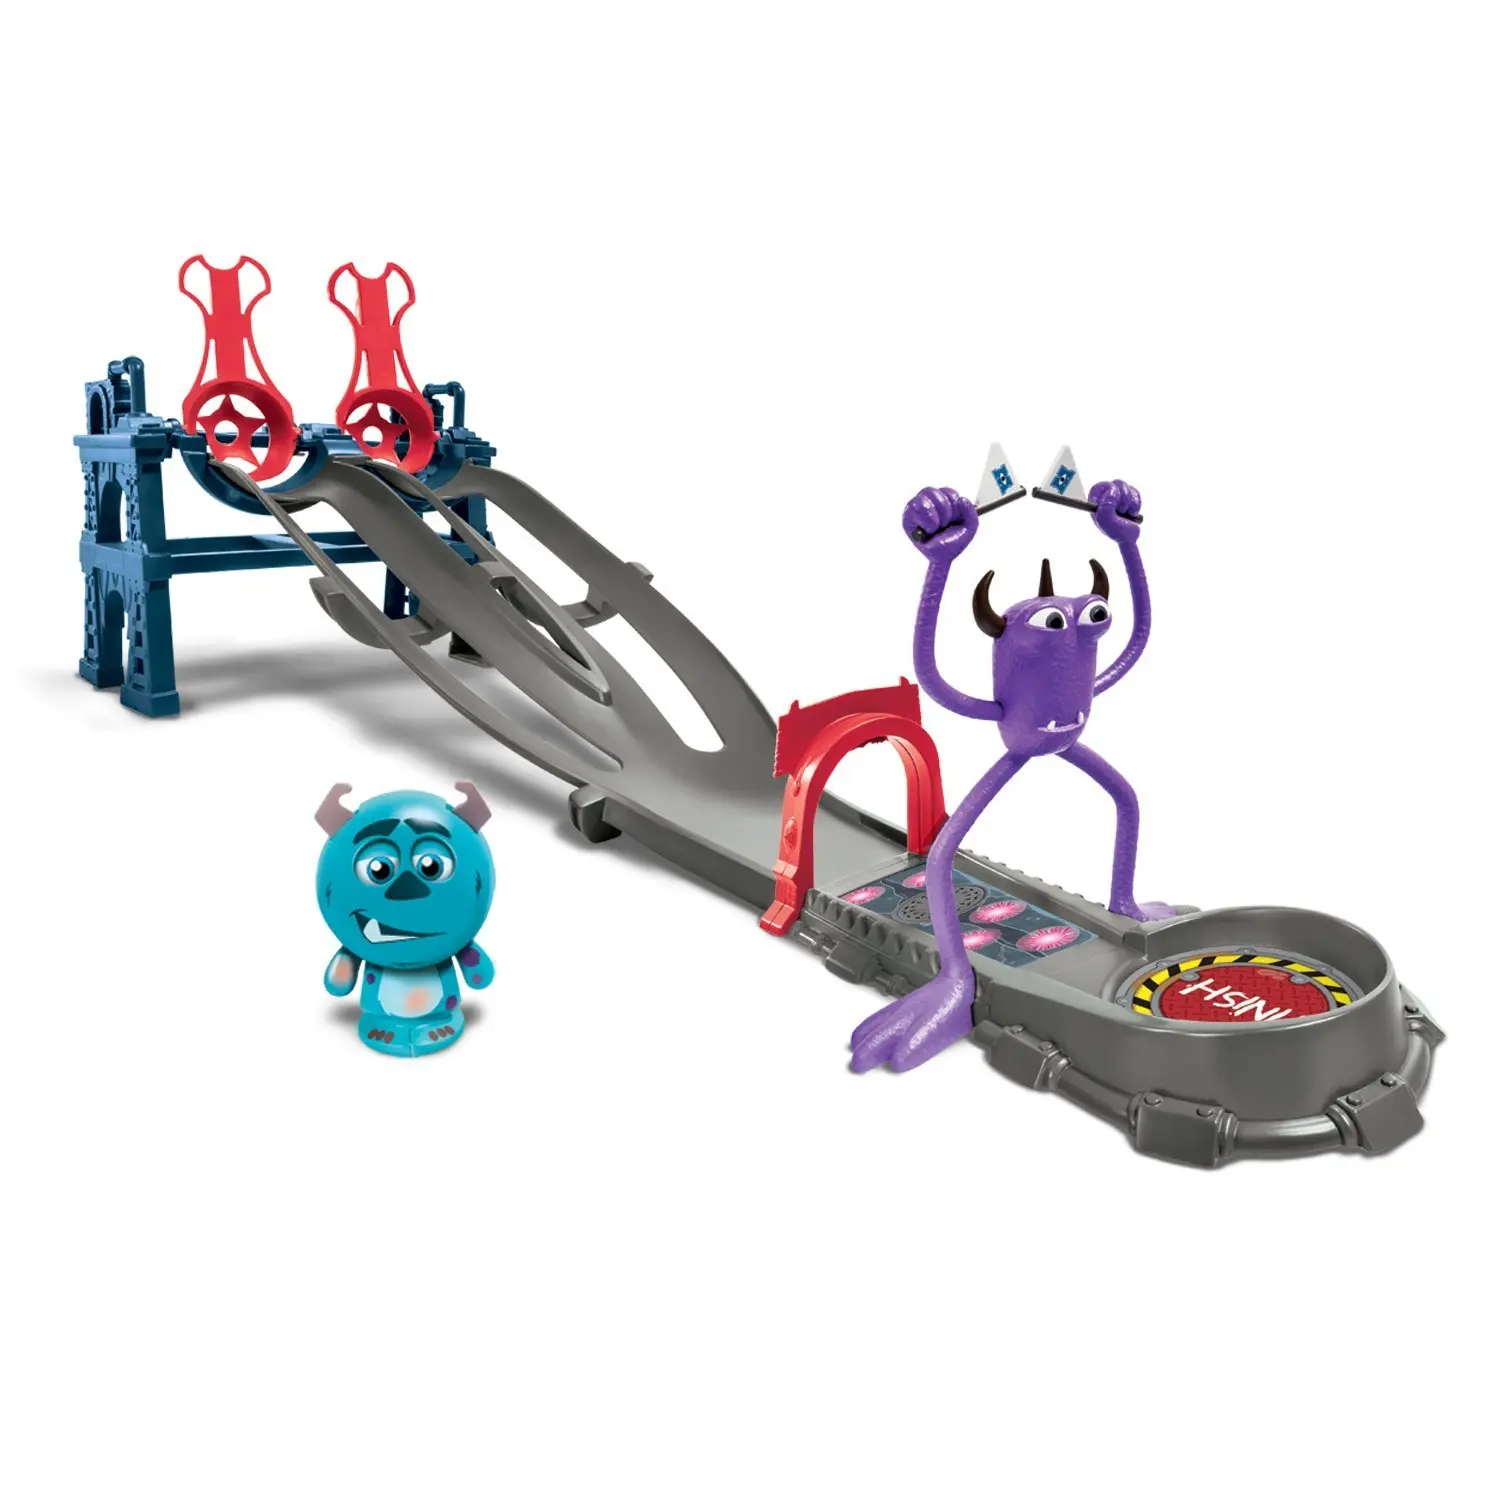 Монстр игрушки игра. Игра Toxic Race Playset University Monster. Monsters Pixar Disney Toxic Race Playset игрушка. Monster Race Pixar игрушка. Университет монстров старт финиш.